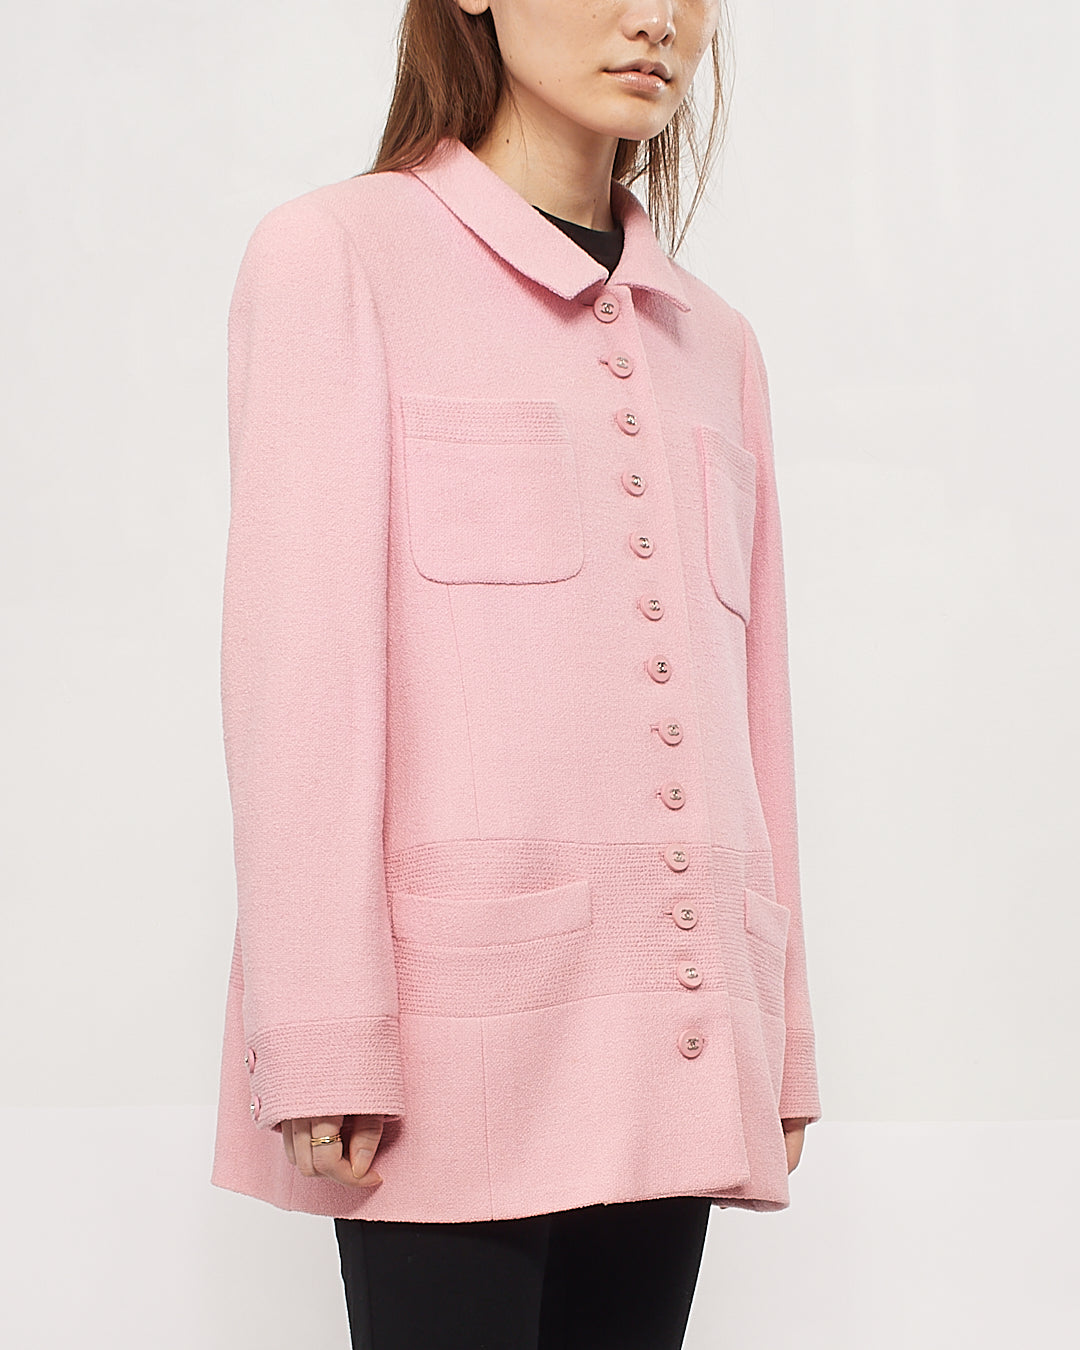 Chanel Pink Tweed Blazer - 42